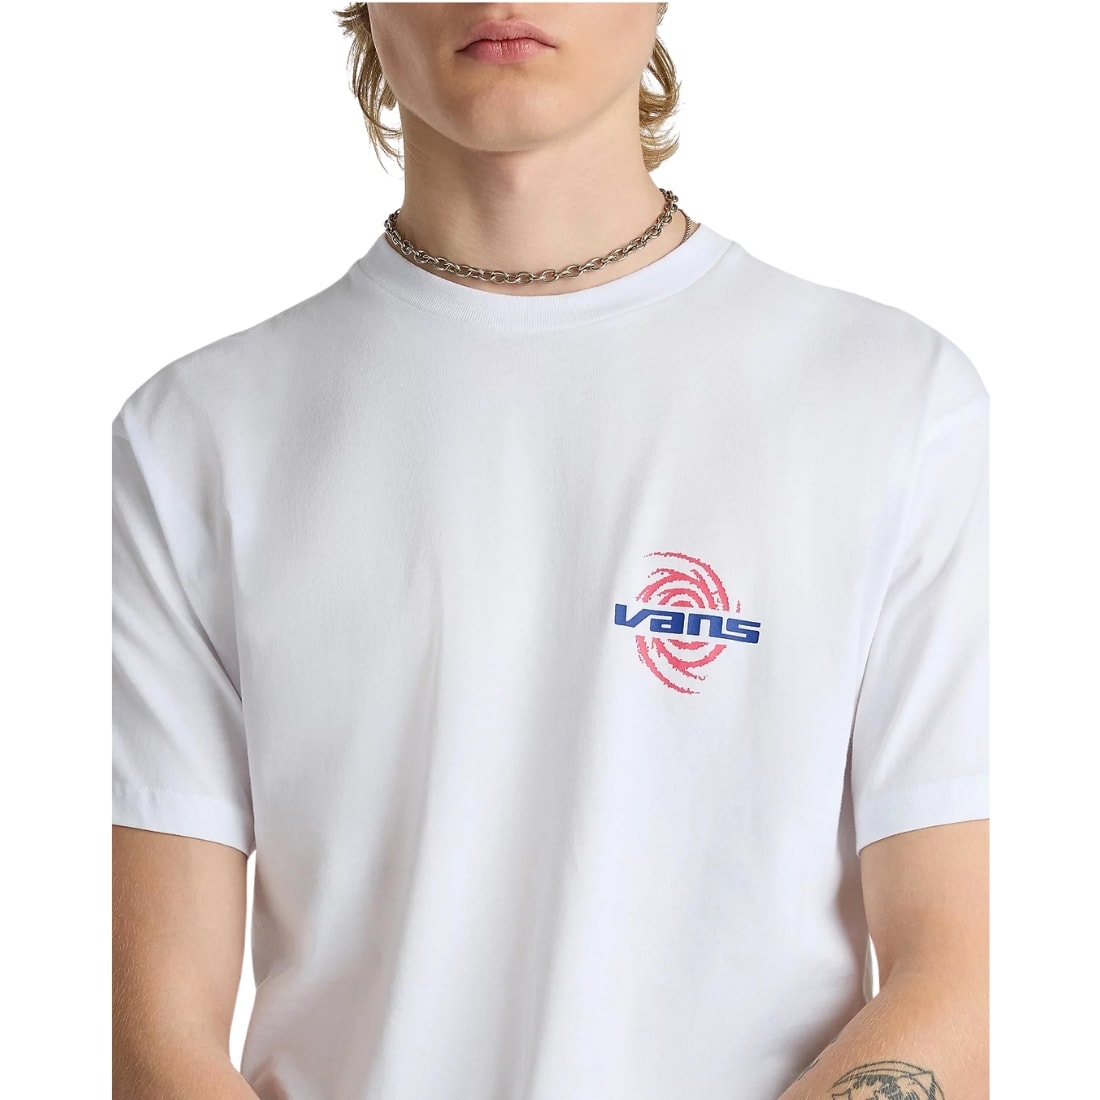 Vans Wormhole Warped T-Shirt - White - Mens Graphic T-Shirt by Vans